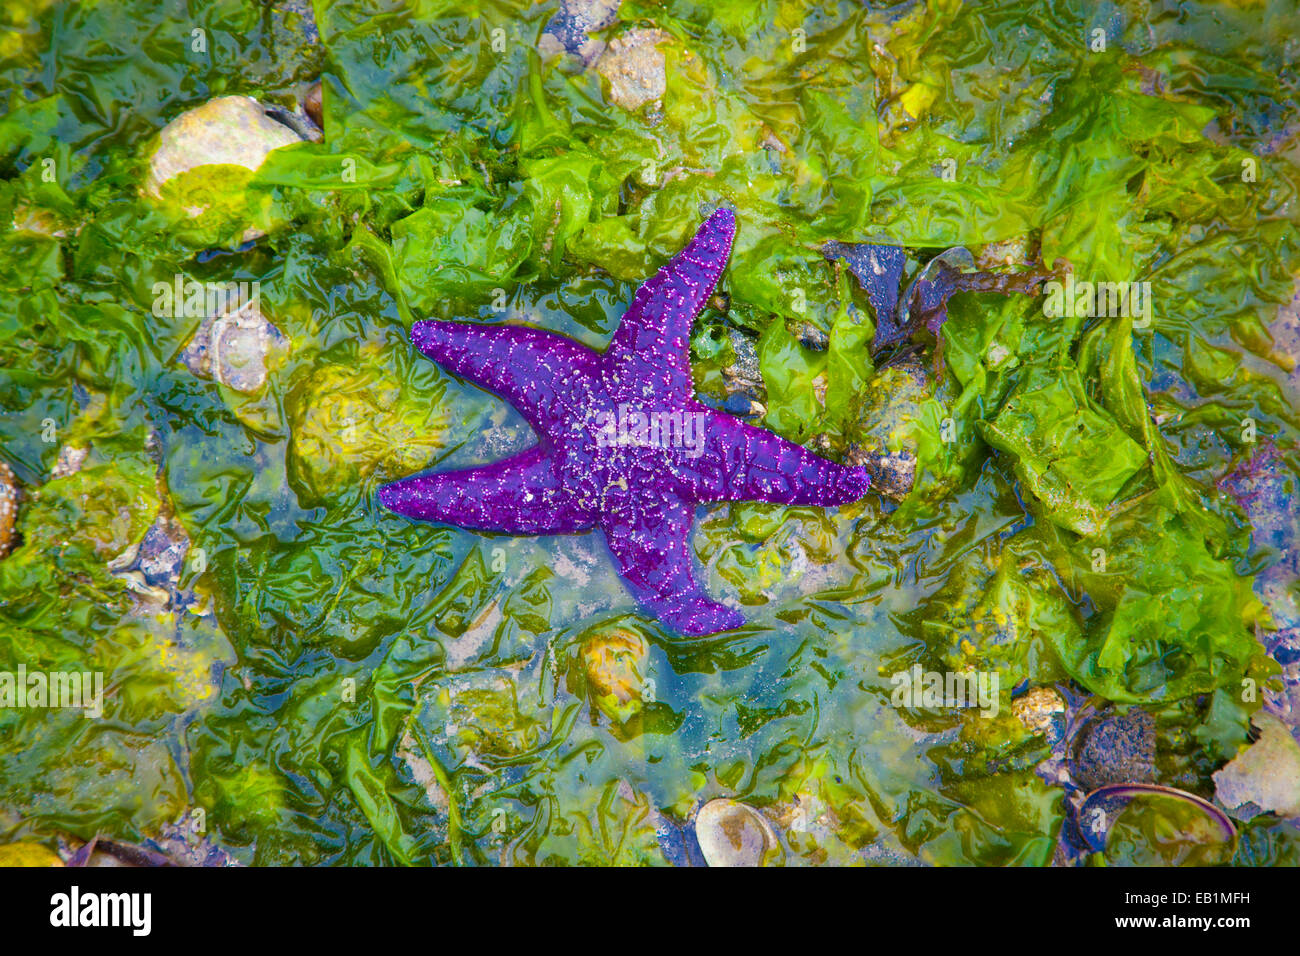 Lila Seestern (Pisaster Ochraceus) auf Algen bei Ebbe in Sechelt, British Columbia, Kanada Stockfoto